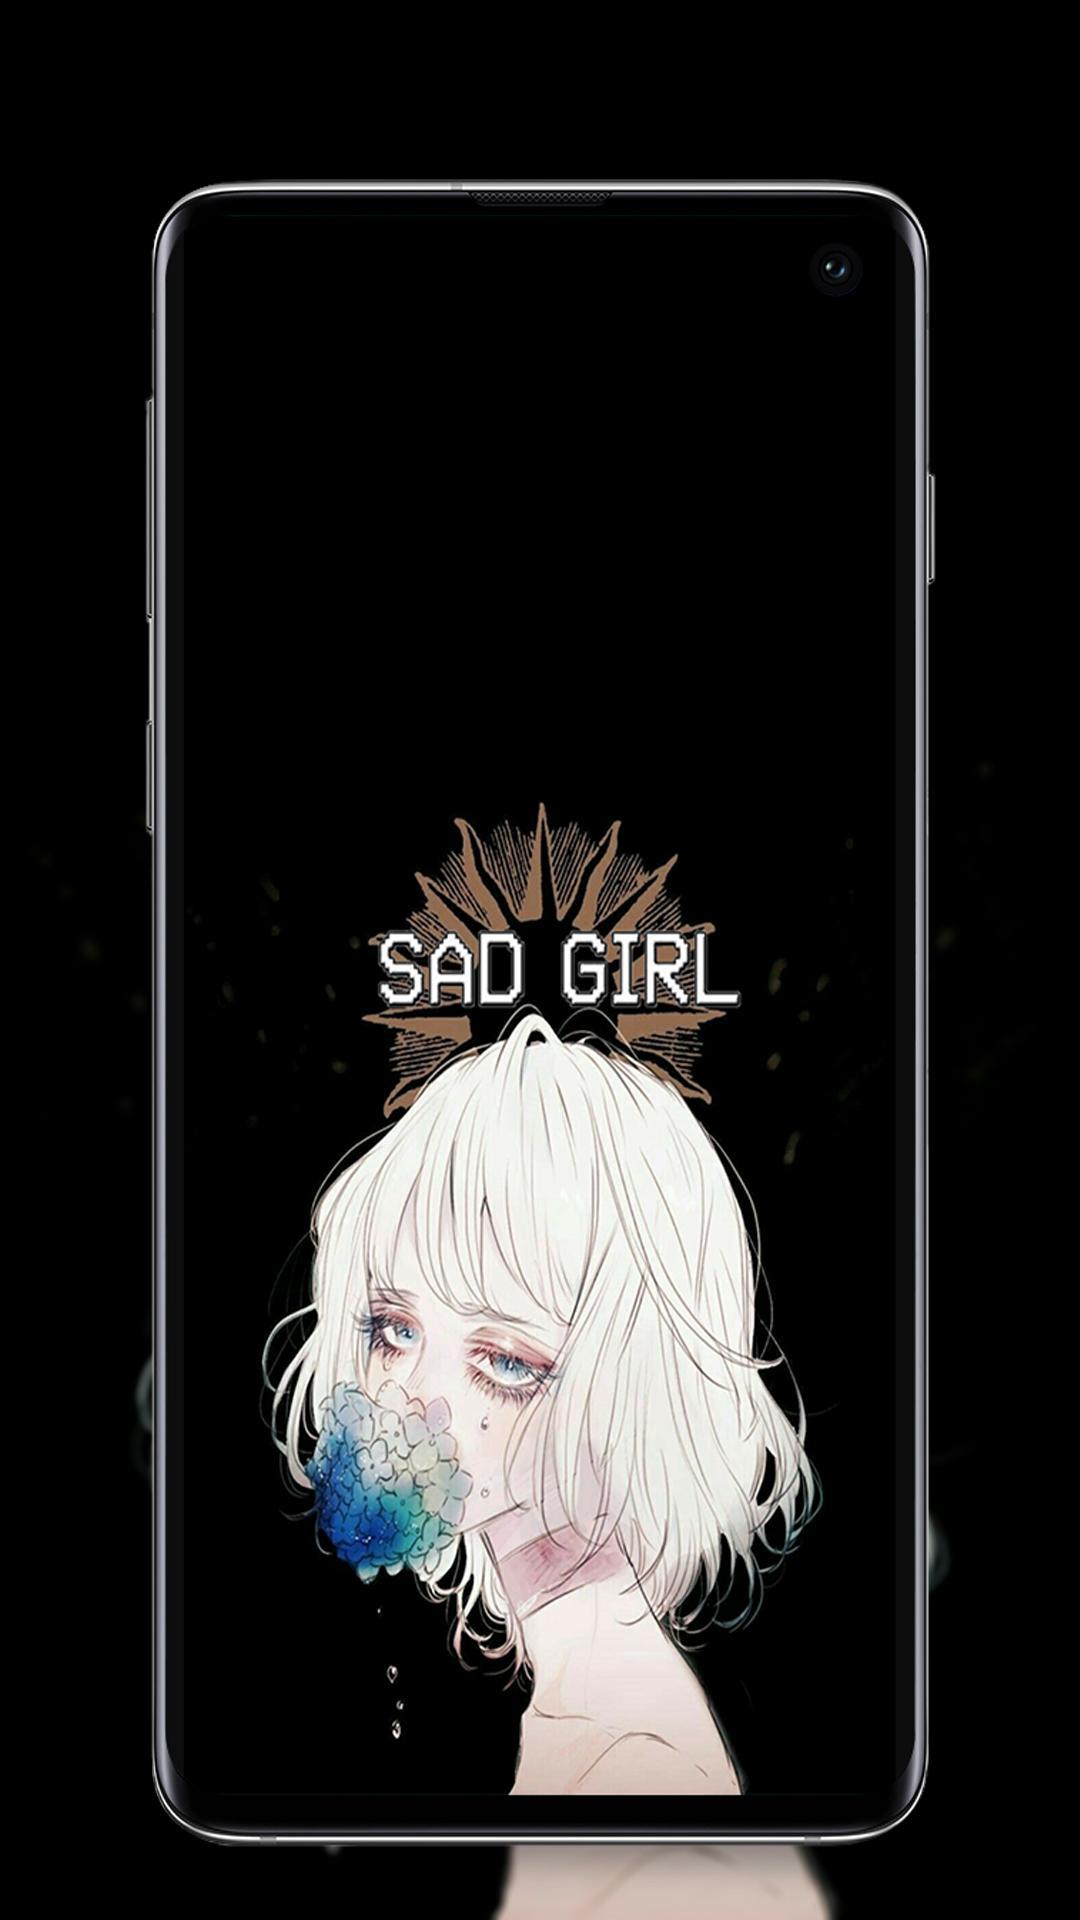 Sad Girl Wallpaper安卓下载 安卓版apk 免费下载